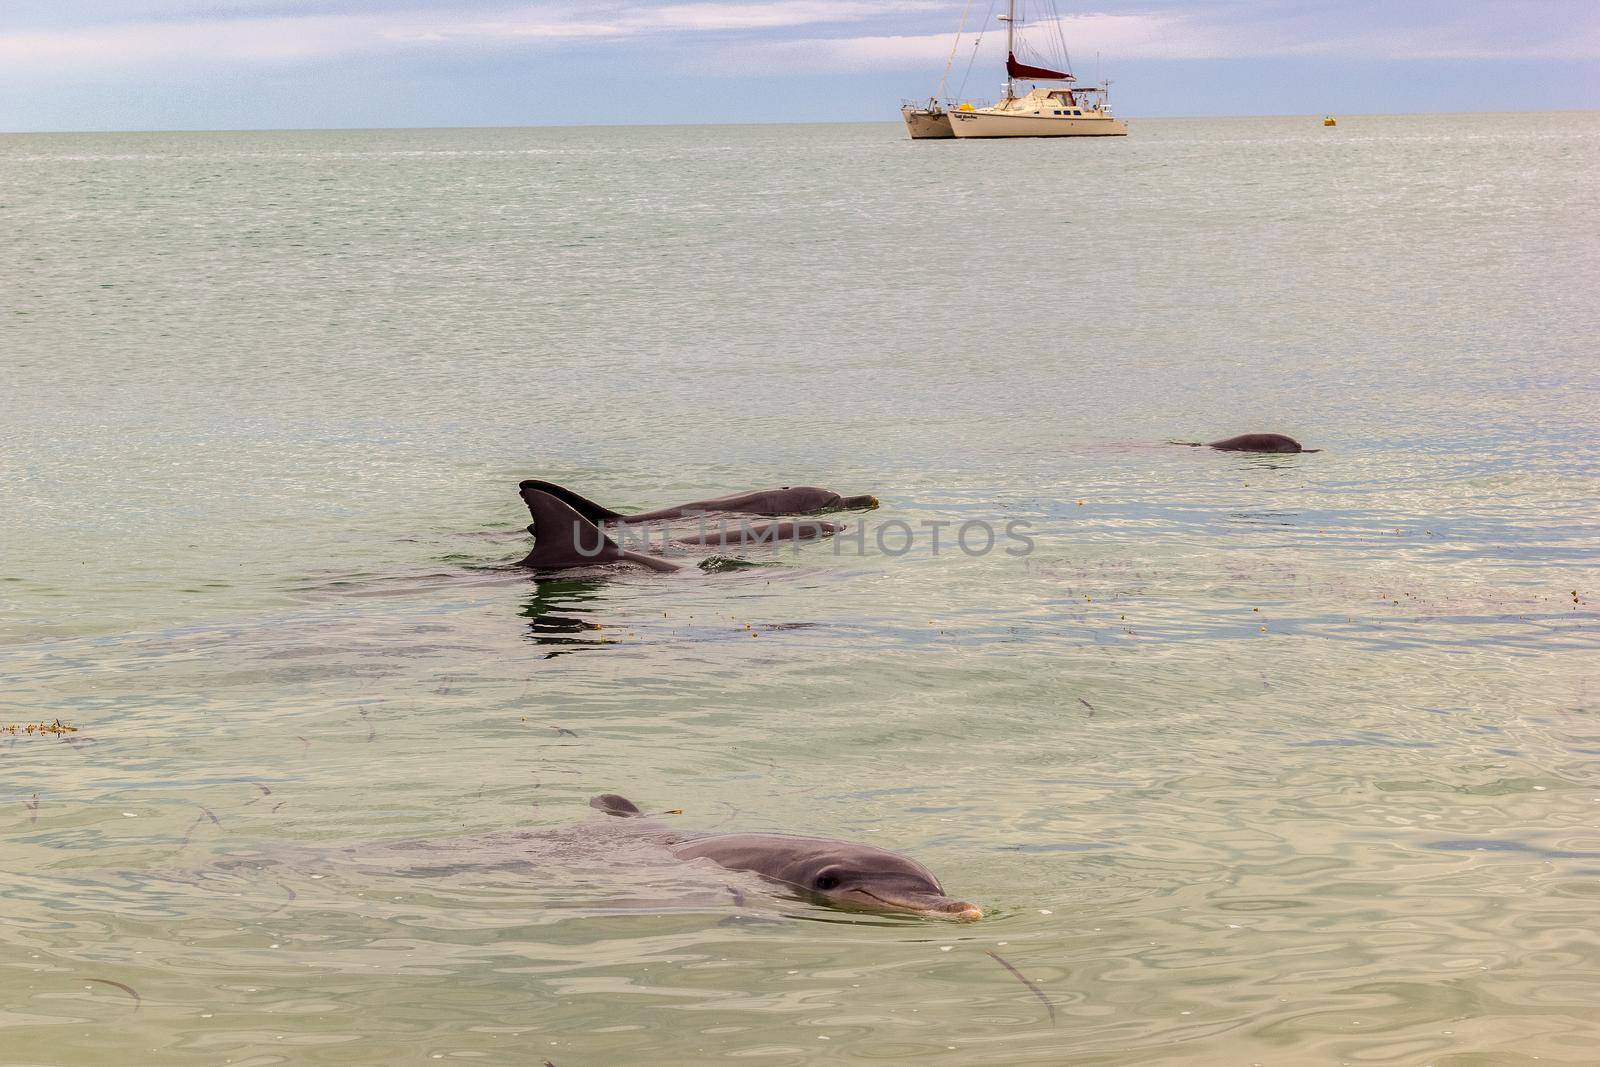 wild dolphins near the shore in Australia Monkey Mia beach, Shark Bay, Australia by bettercallcurry